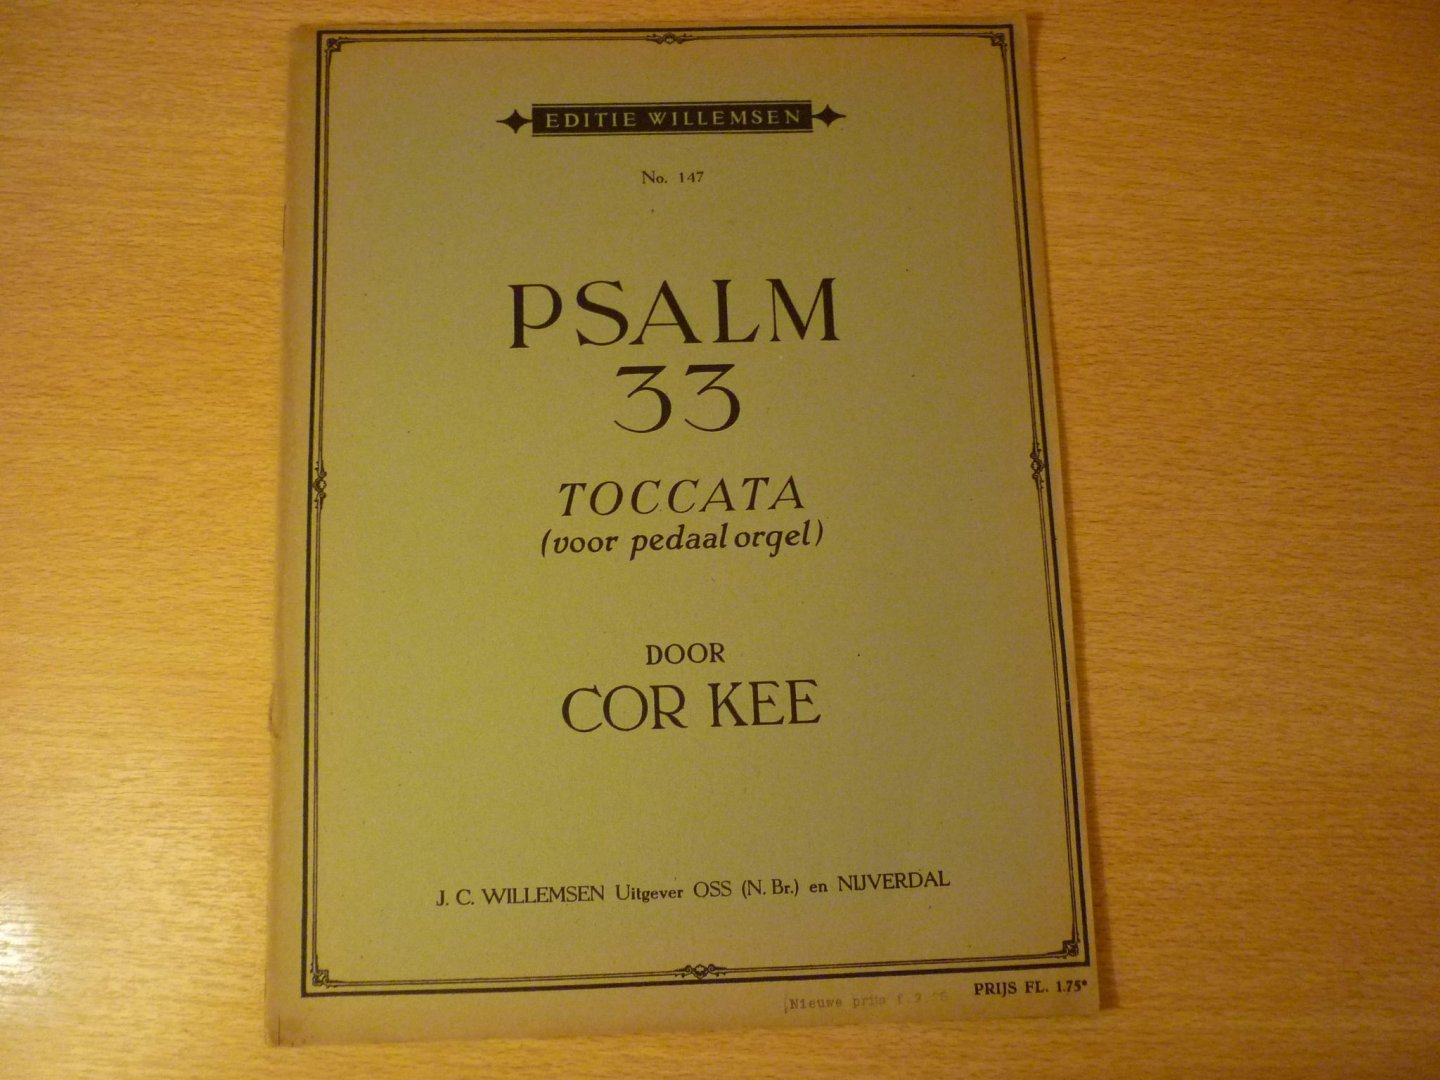 Kee; Cor - Psalm 33; Toccata